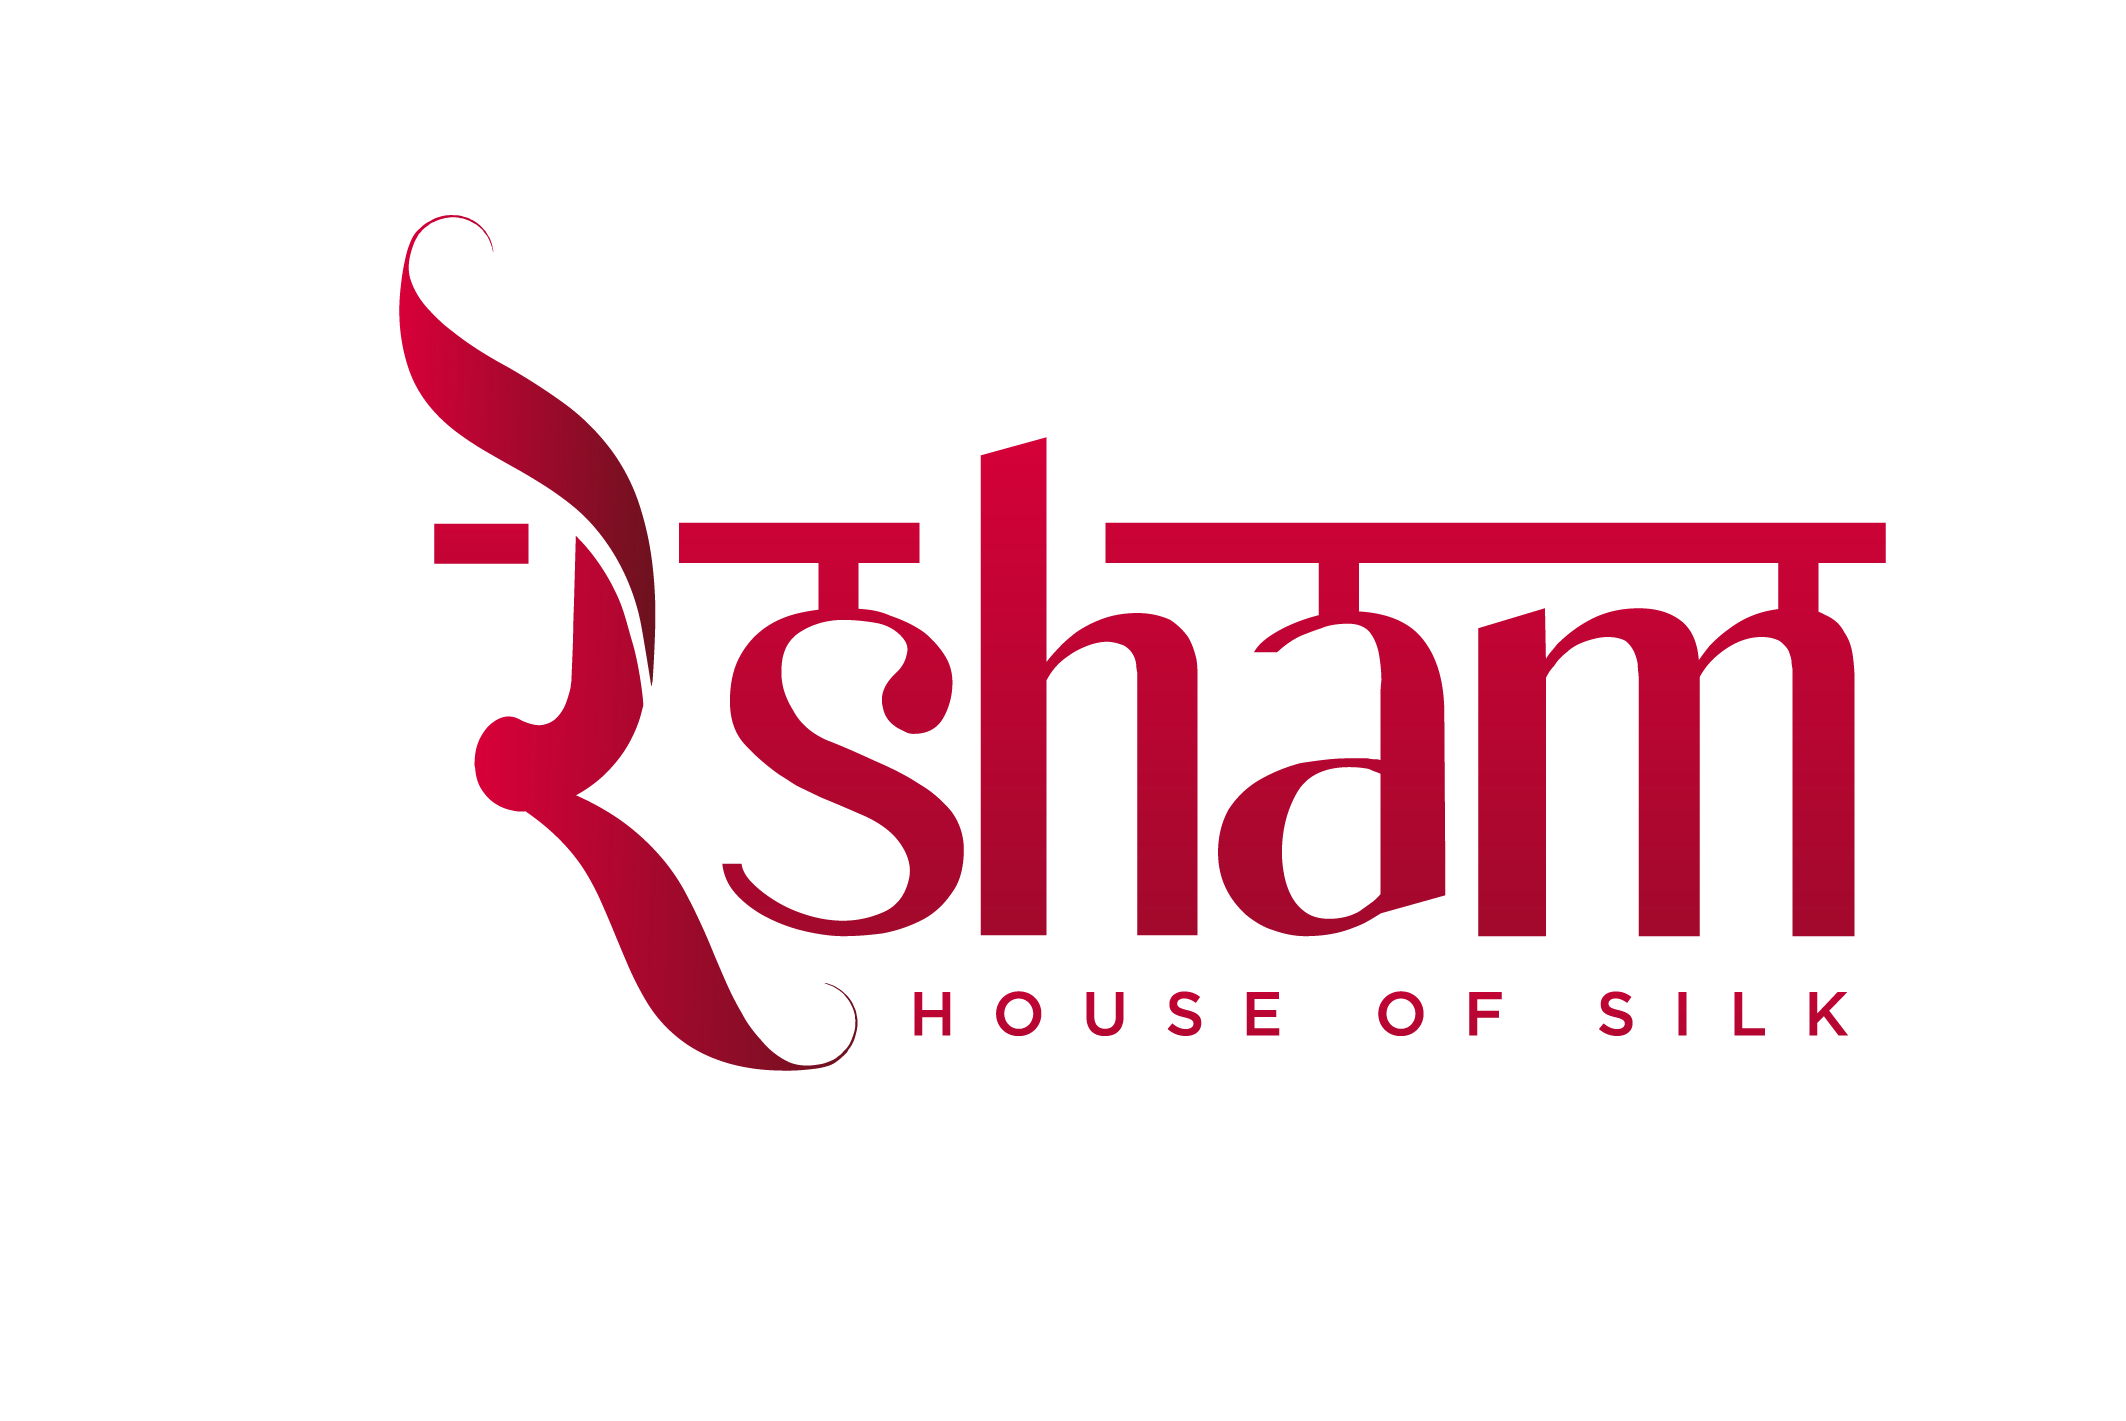 Resham - House Of Silk